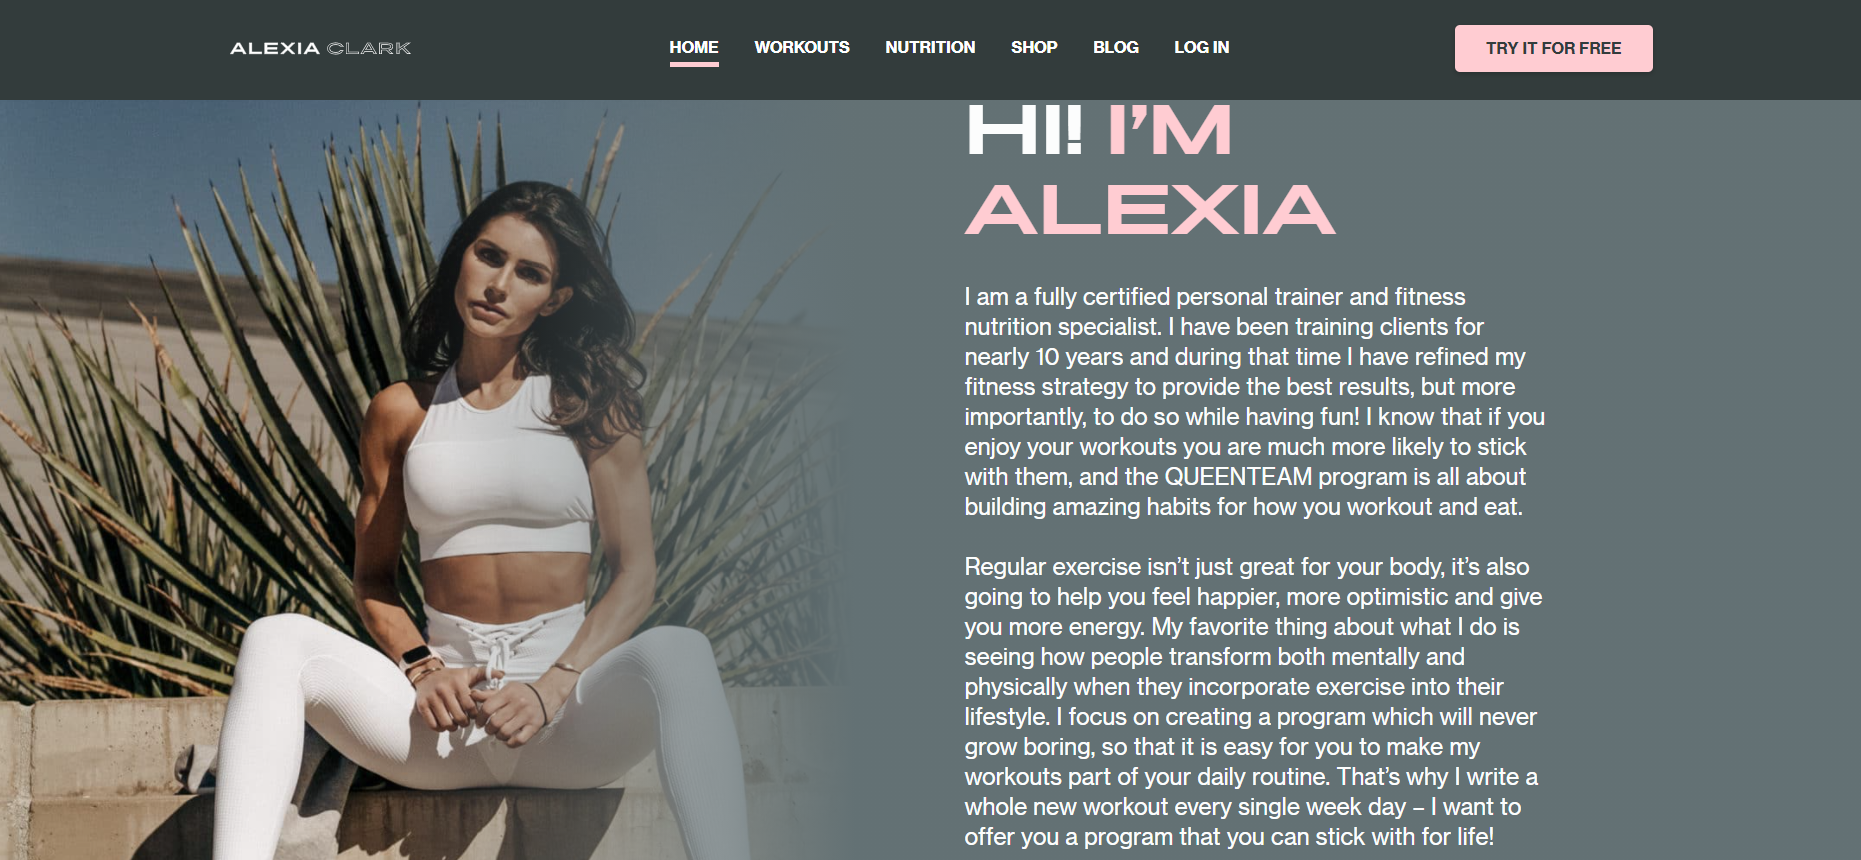 Alexia Clark Personal Trainer Profile Example 